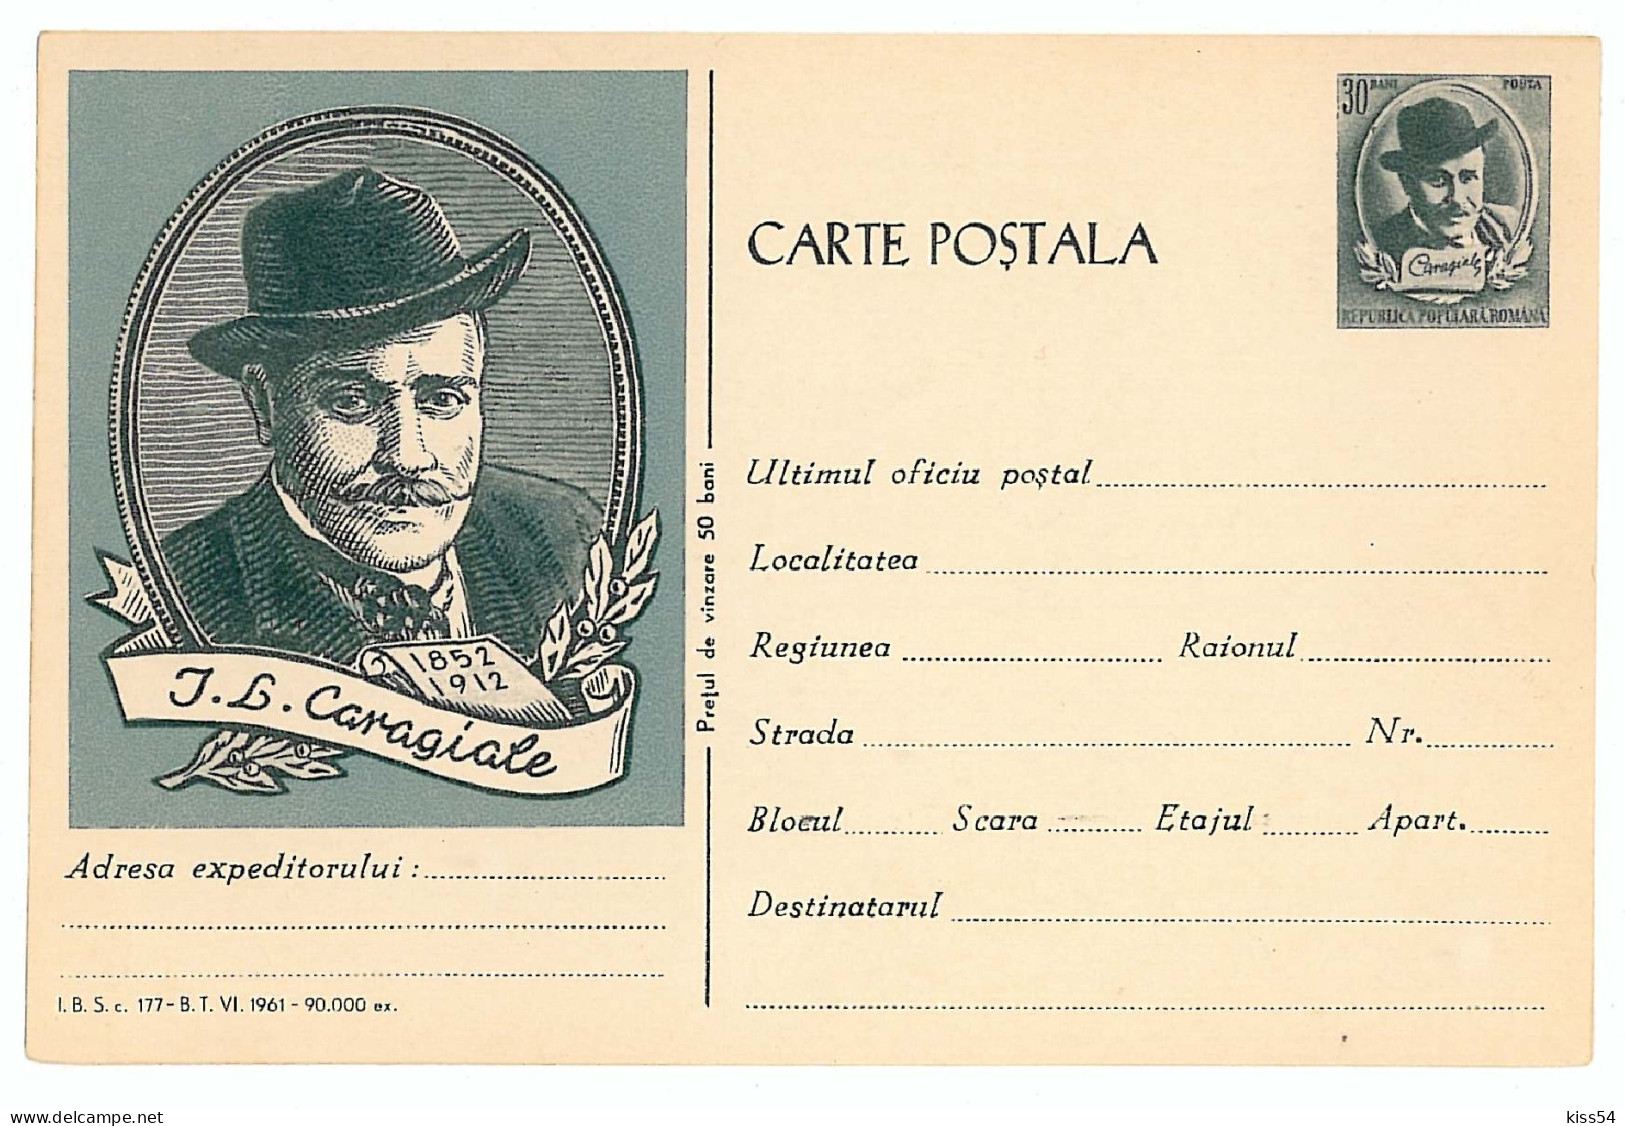 IP 61 C - 177c Ion LUCA CARAGIALE, Writer, Romania - Stationery - Unused - 1961 - Postal Stationery